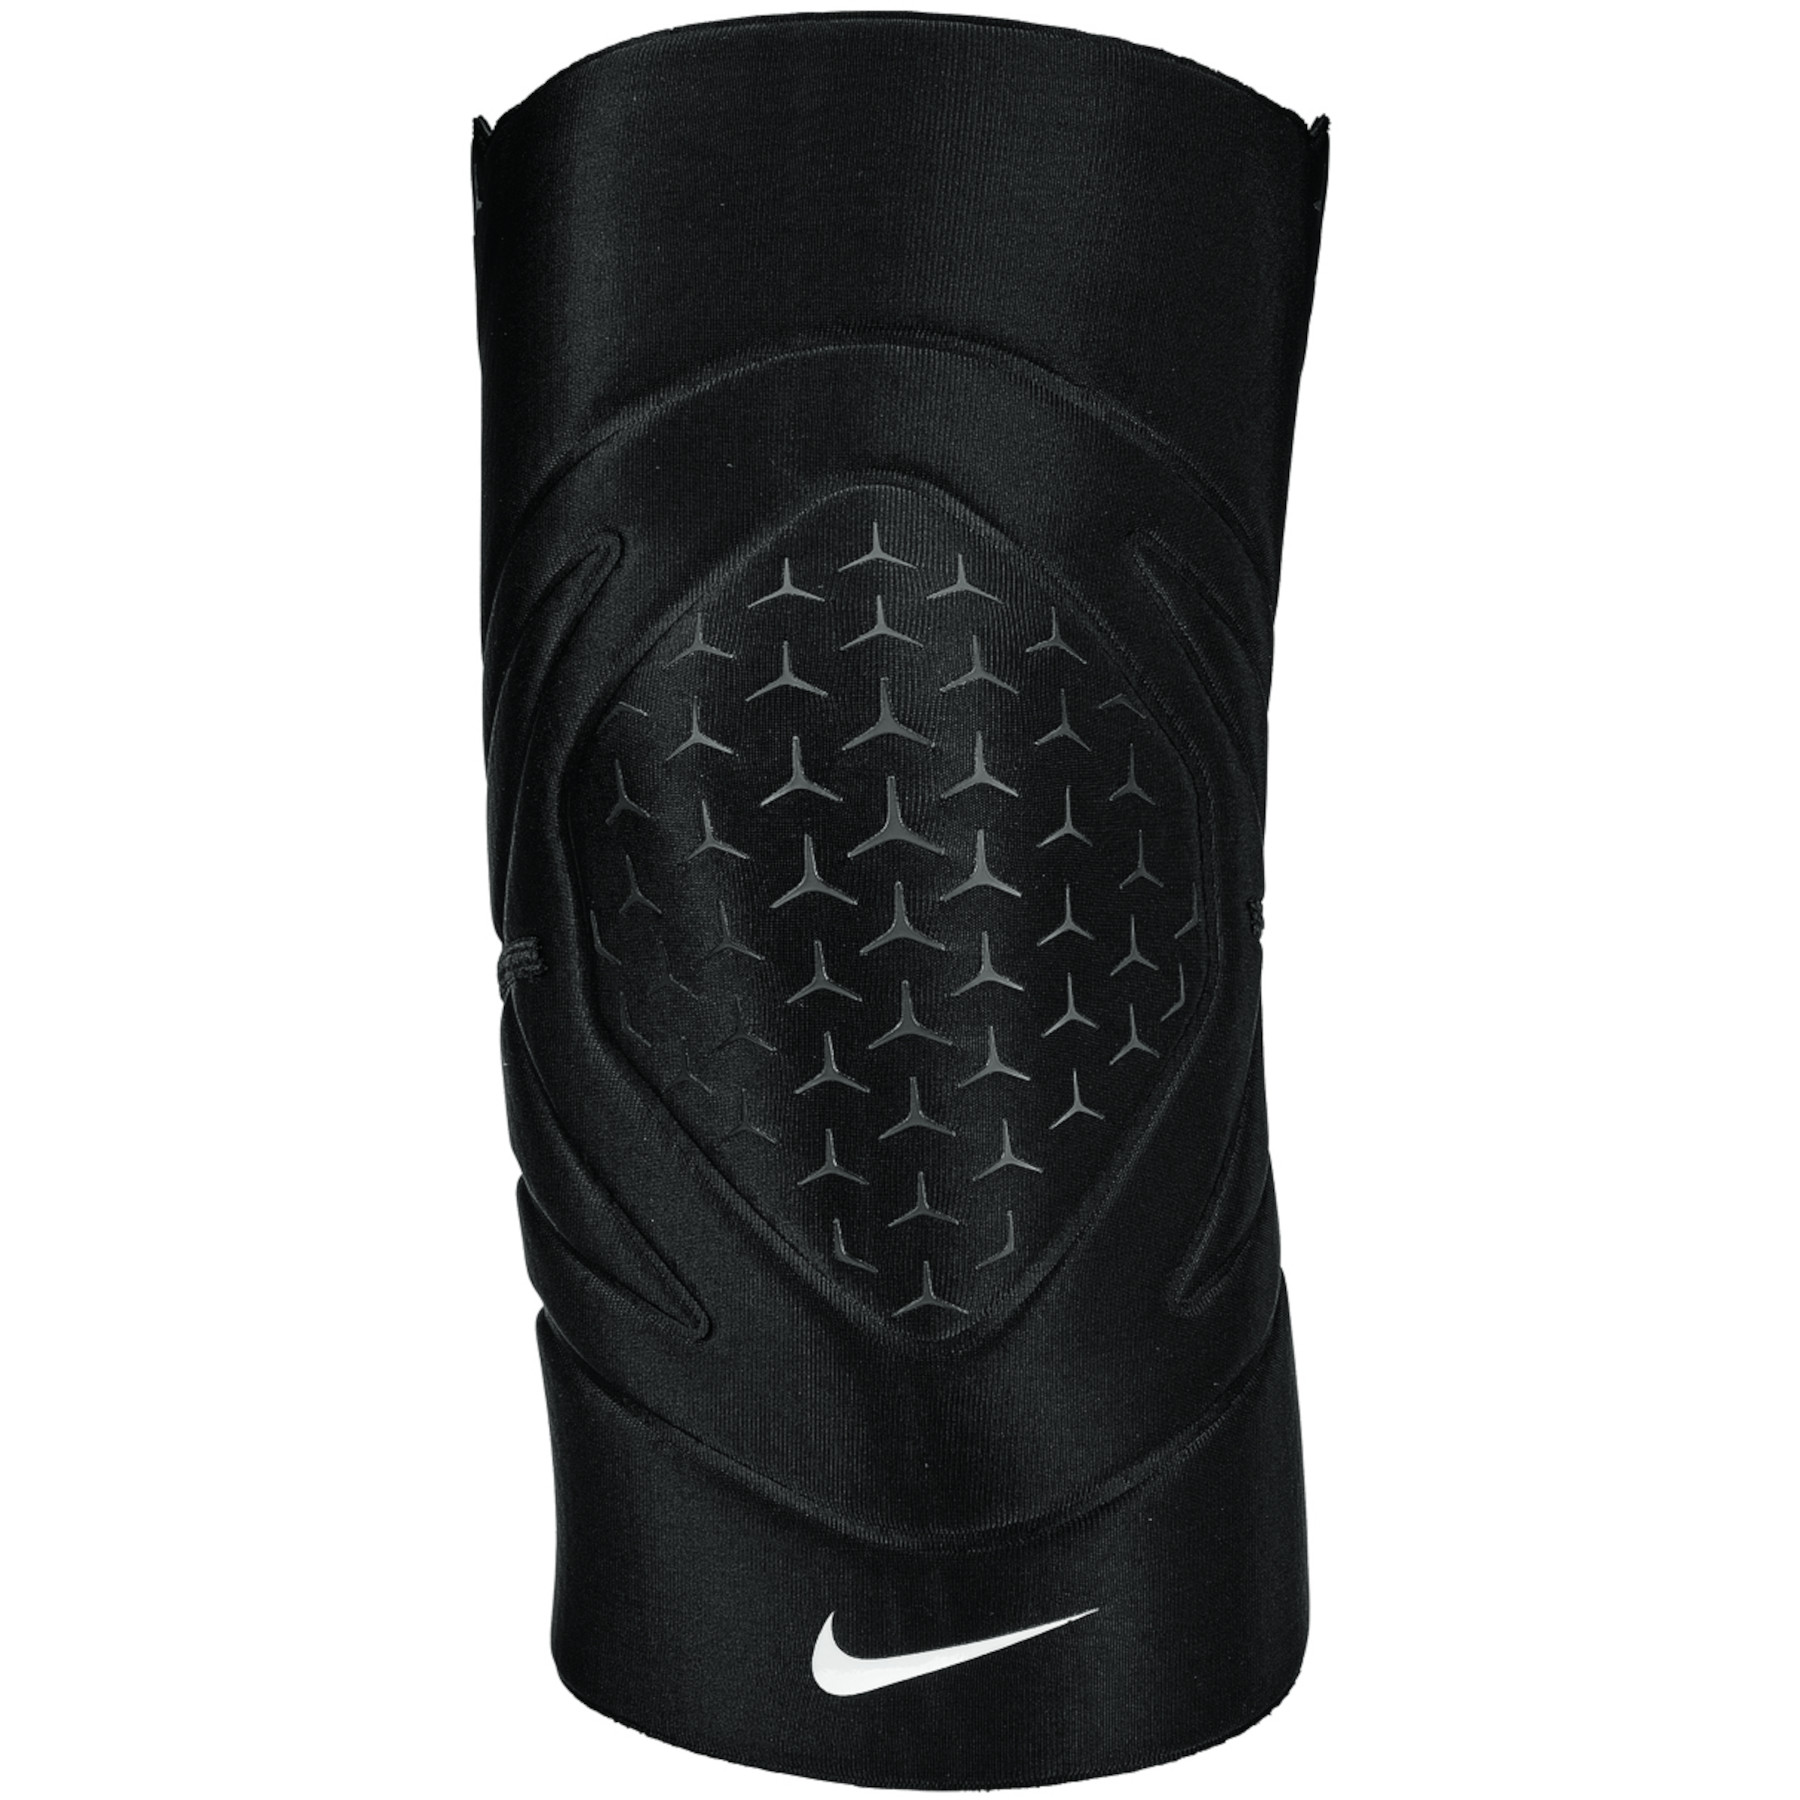 Picture of Nike Pro Closed Patella Knee Sleeve 3.0 - black/white 010